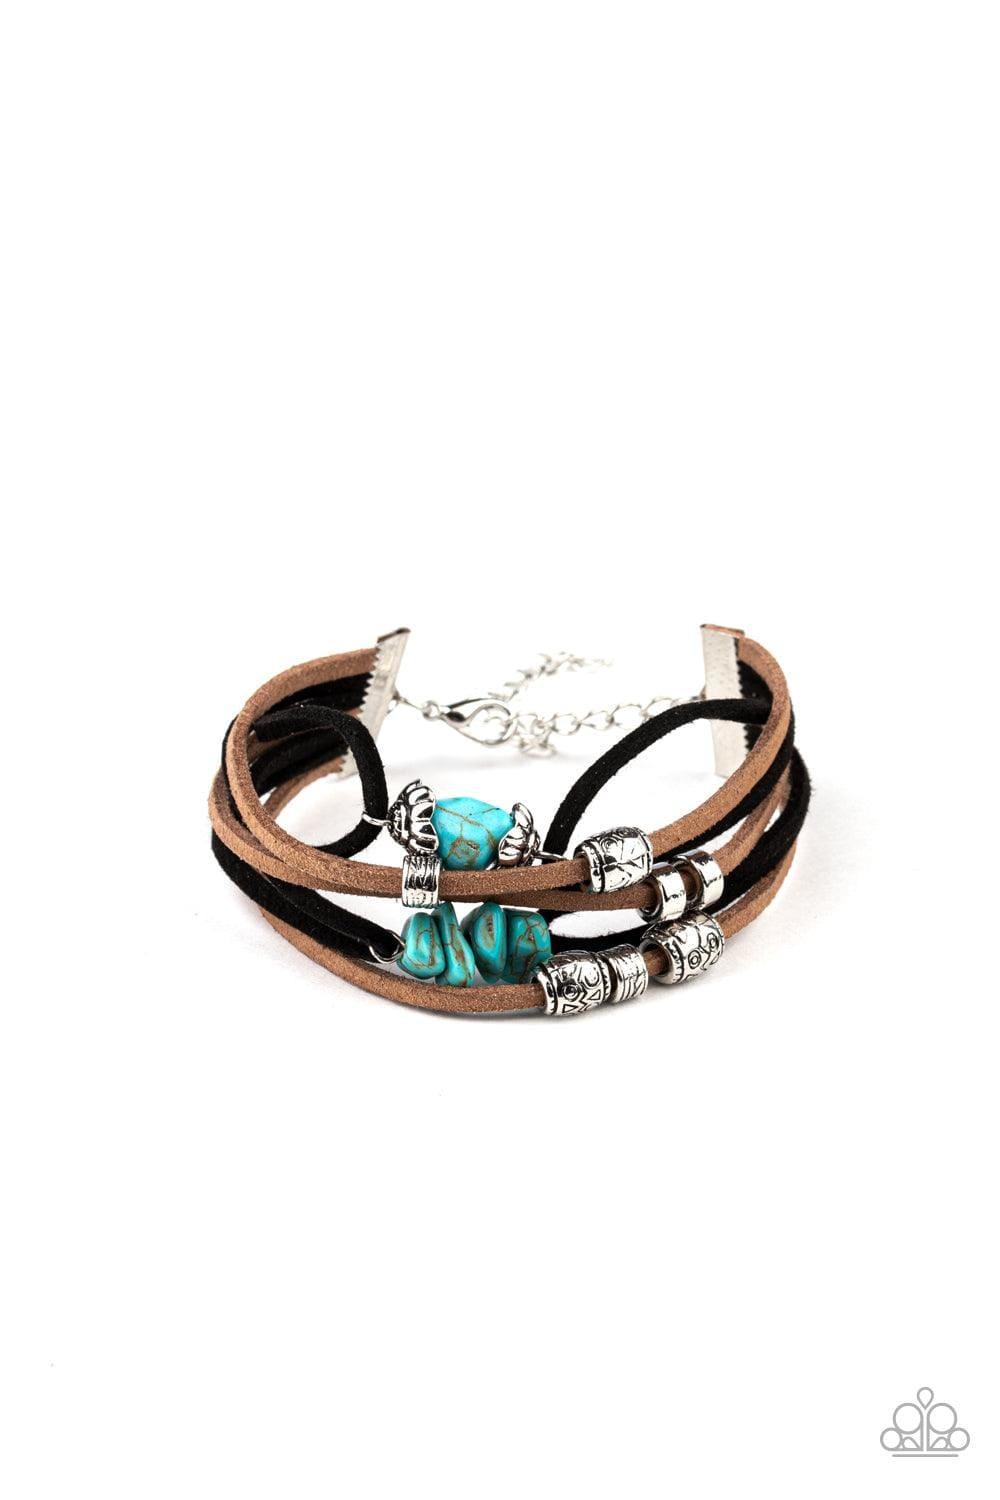 Paparazzi Accessories - Rocky Mountain Rebel - Turquoise Bracelet - Bling by JessieK